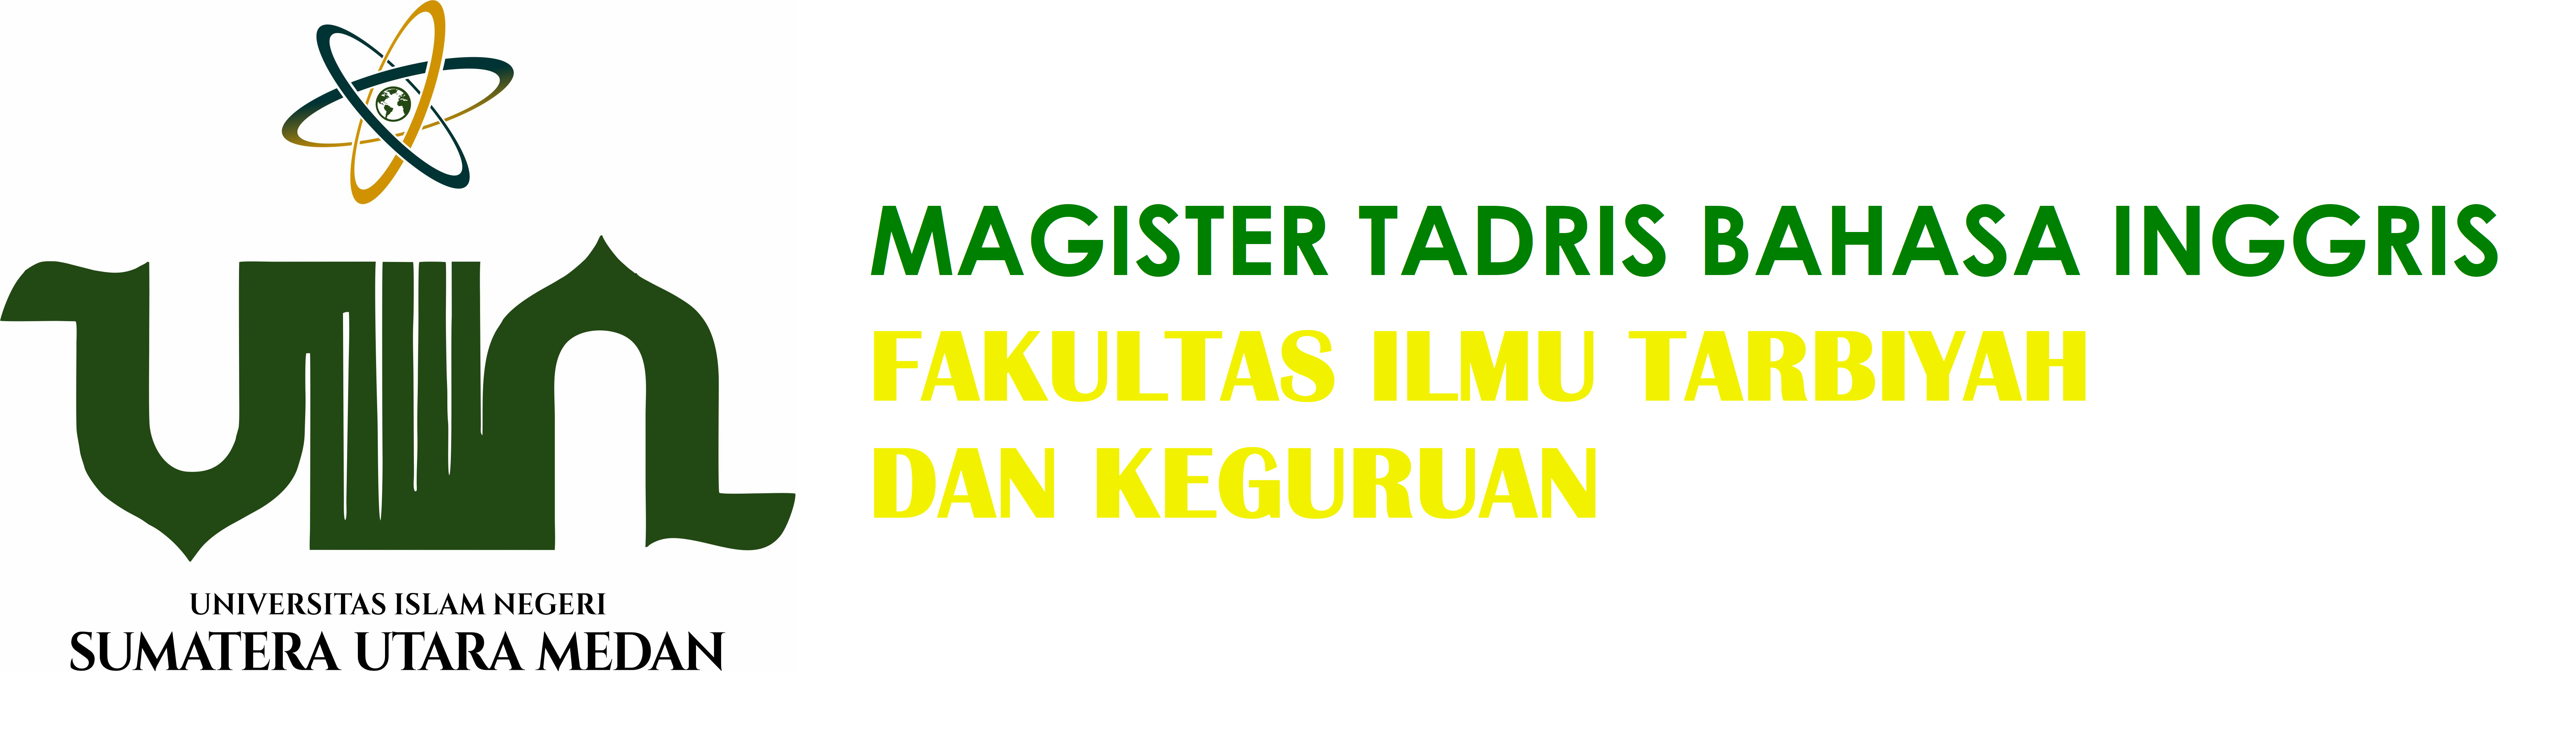 Magister Tadris Bahasa Inggris